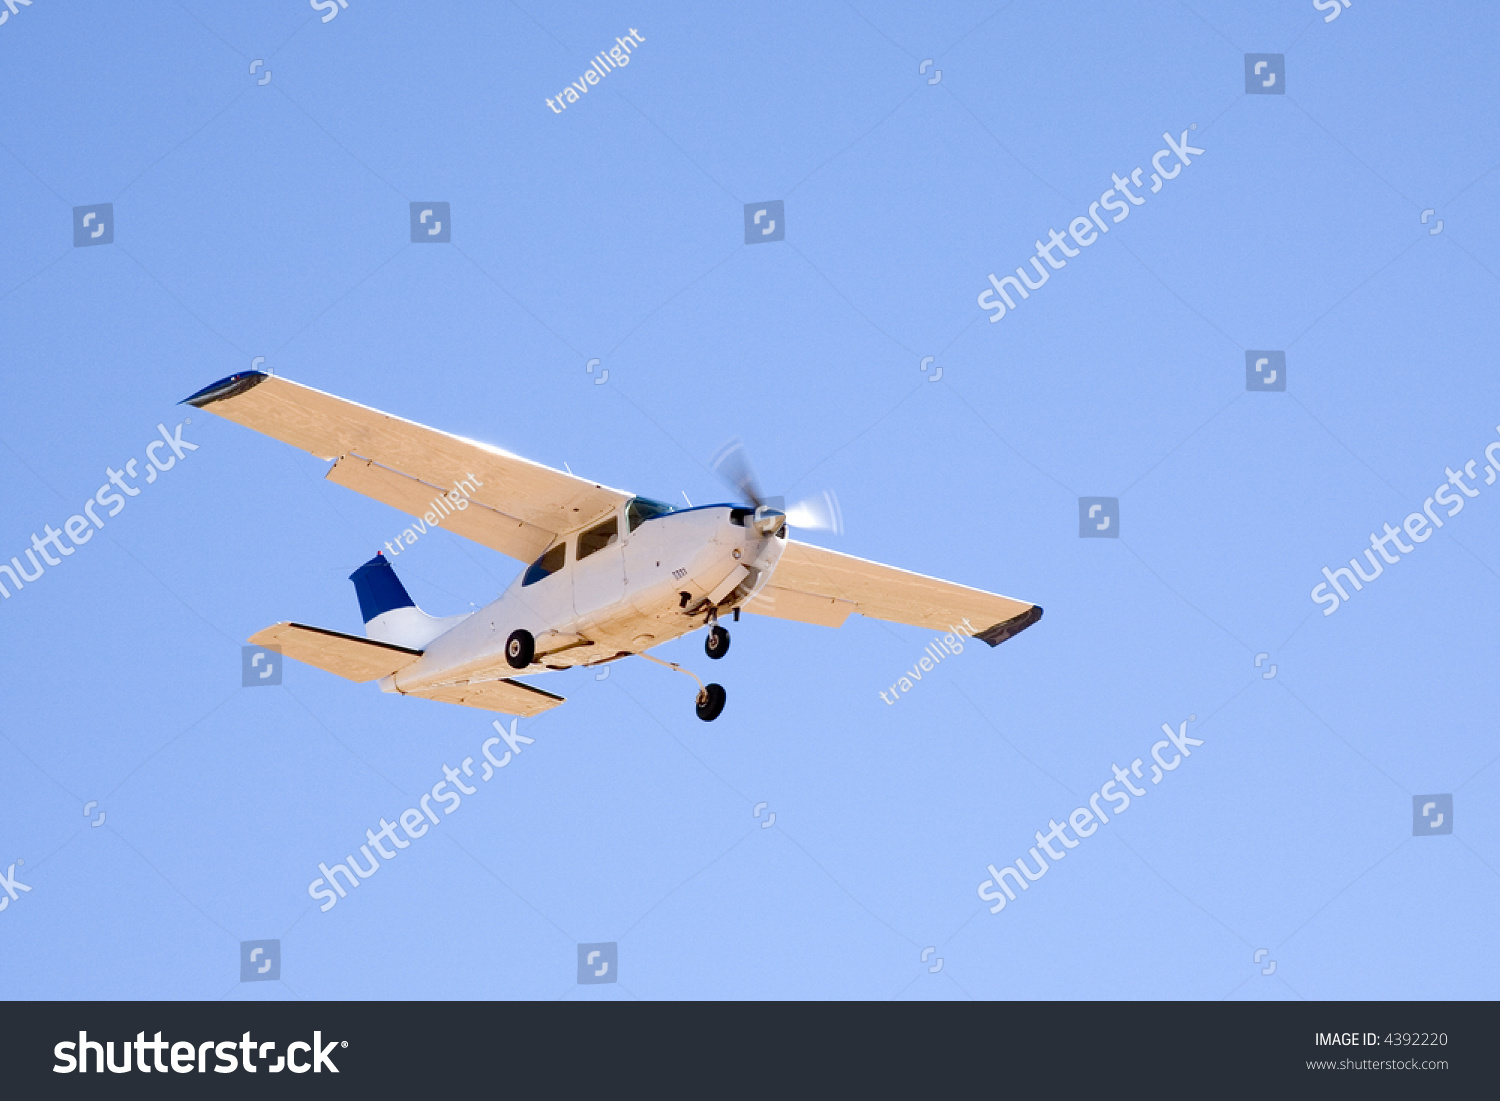 Sunlit Cessna Light Aeroplane Flying In Clear Blue Sky. Stock Photo